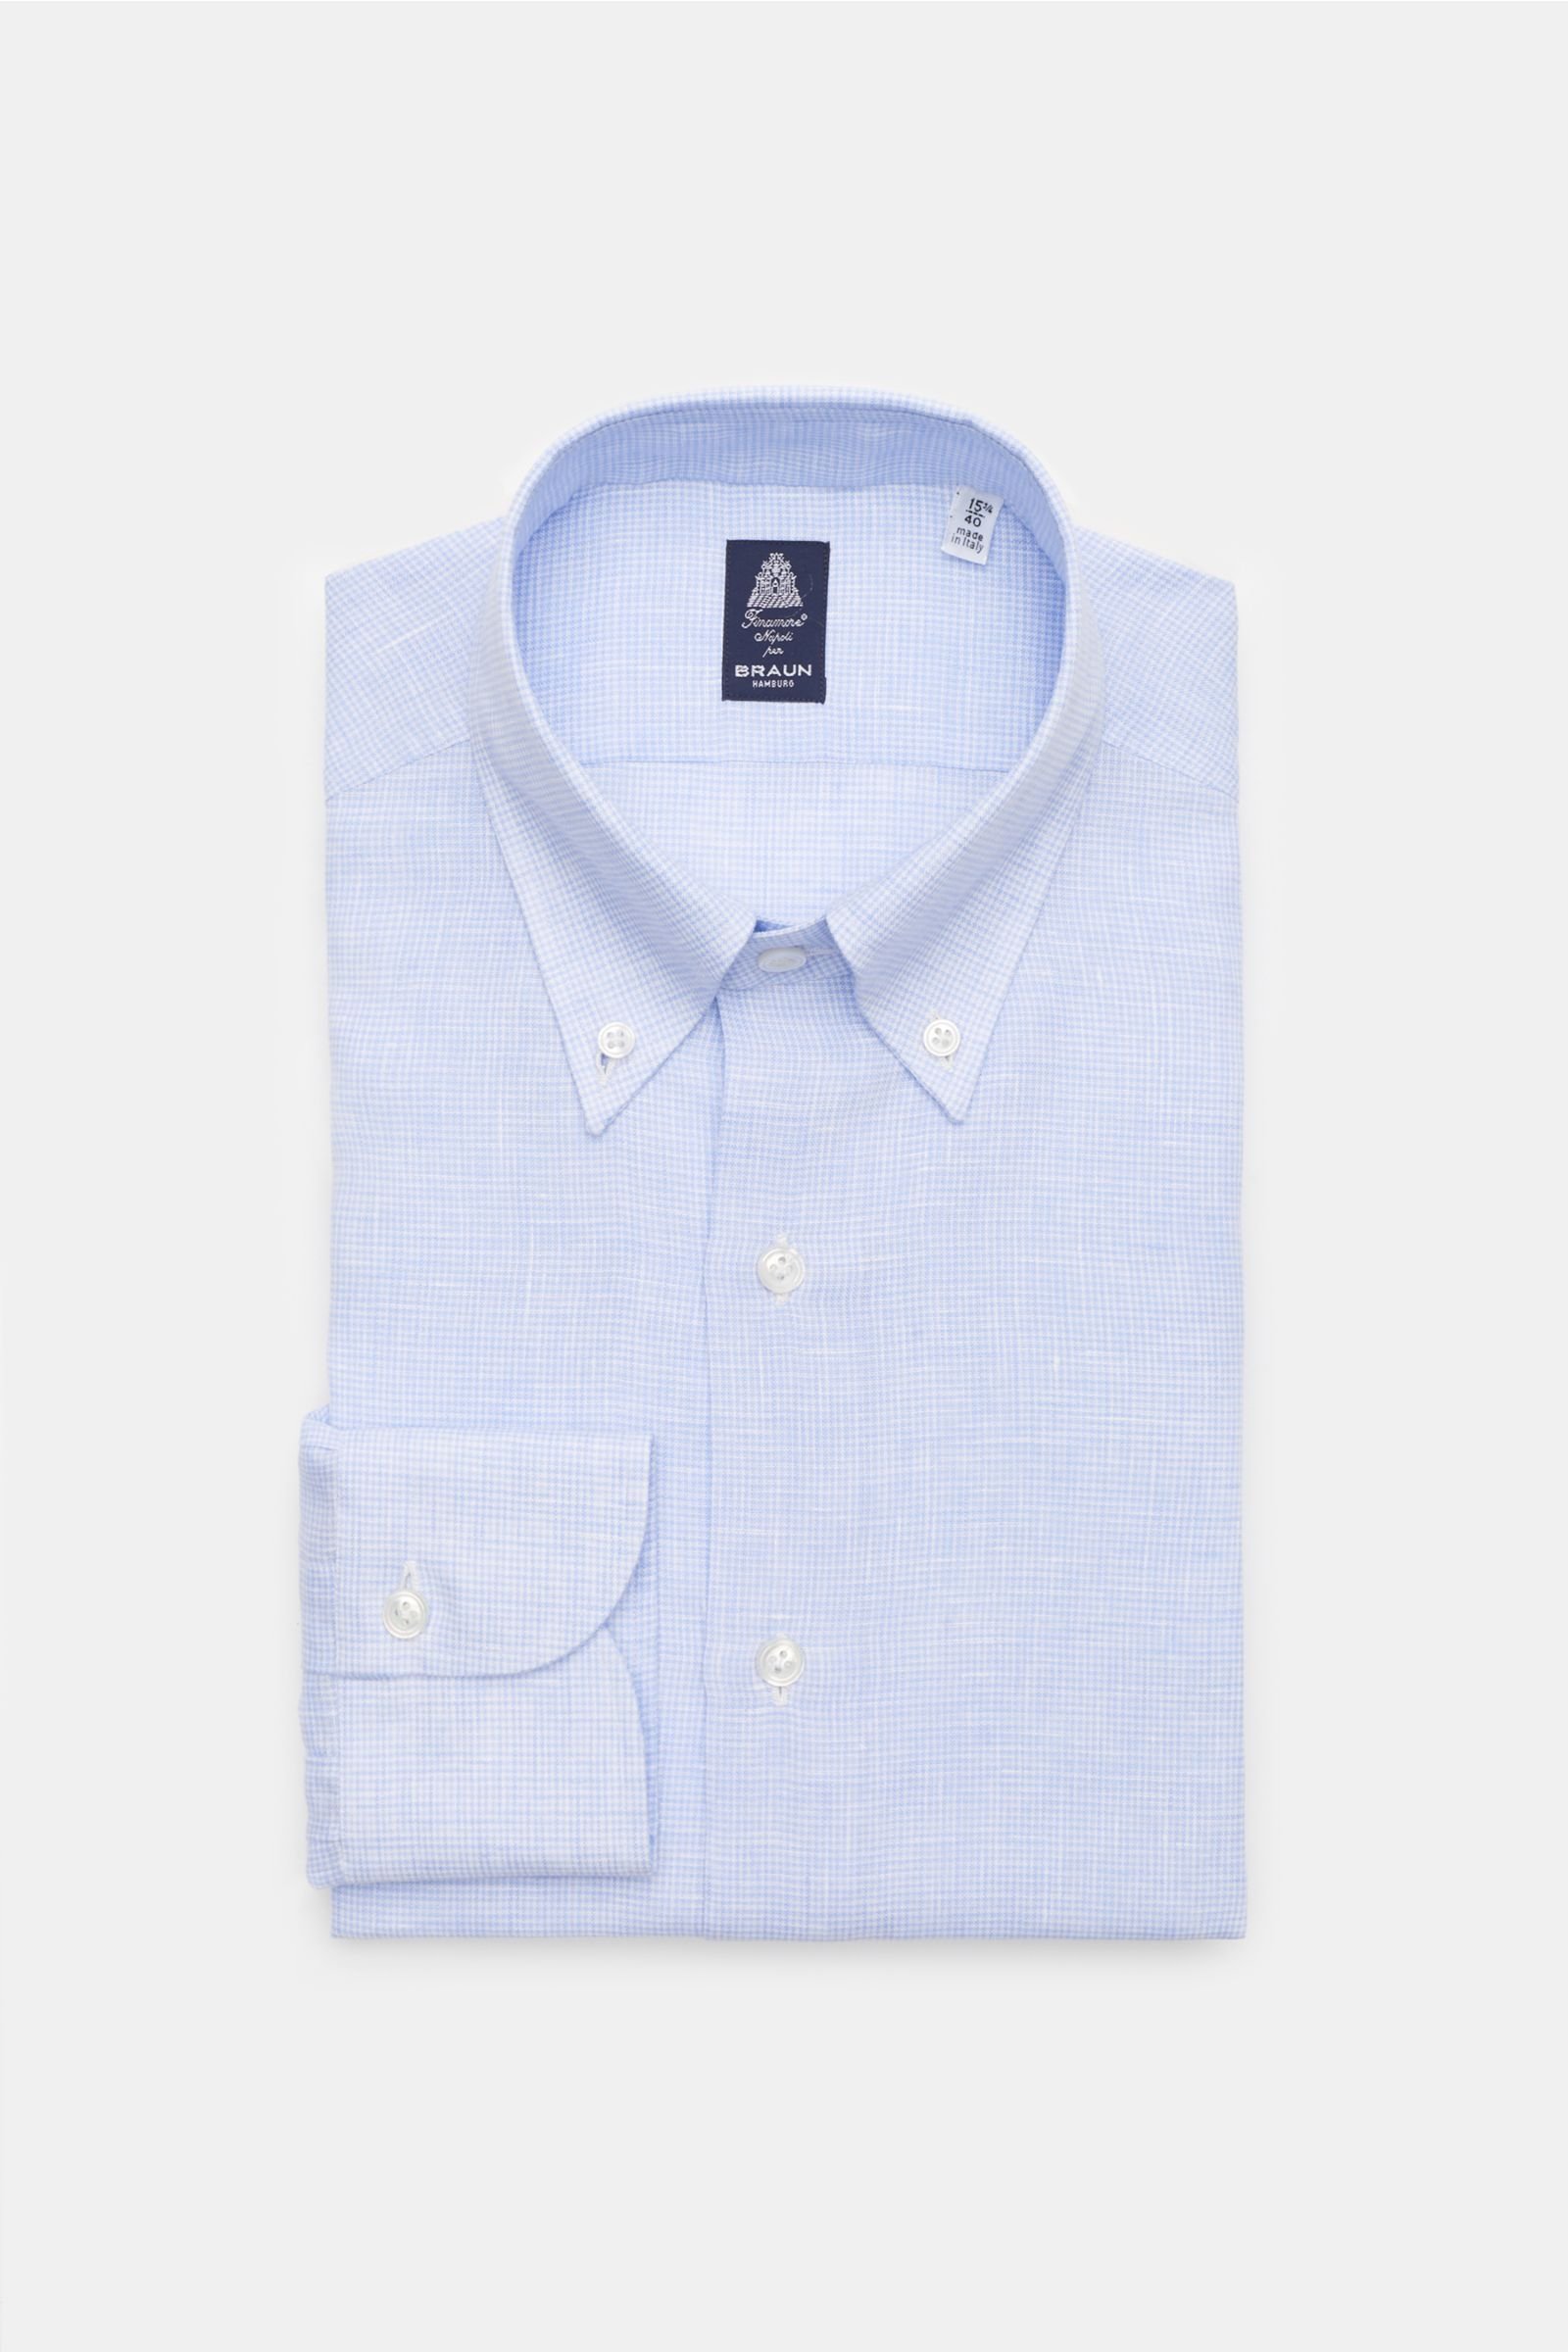 Linen shirt 'Leonardo Napoli' button-down collar light blue/white checked